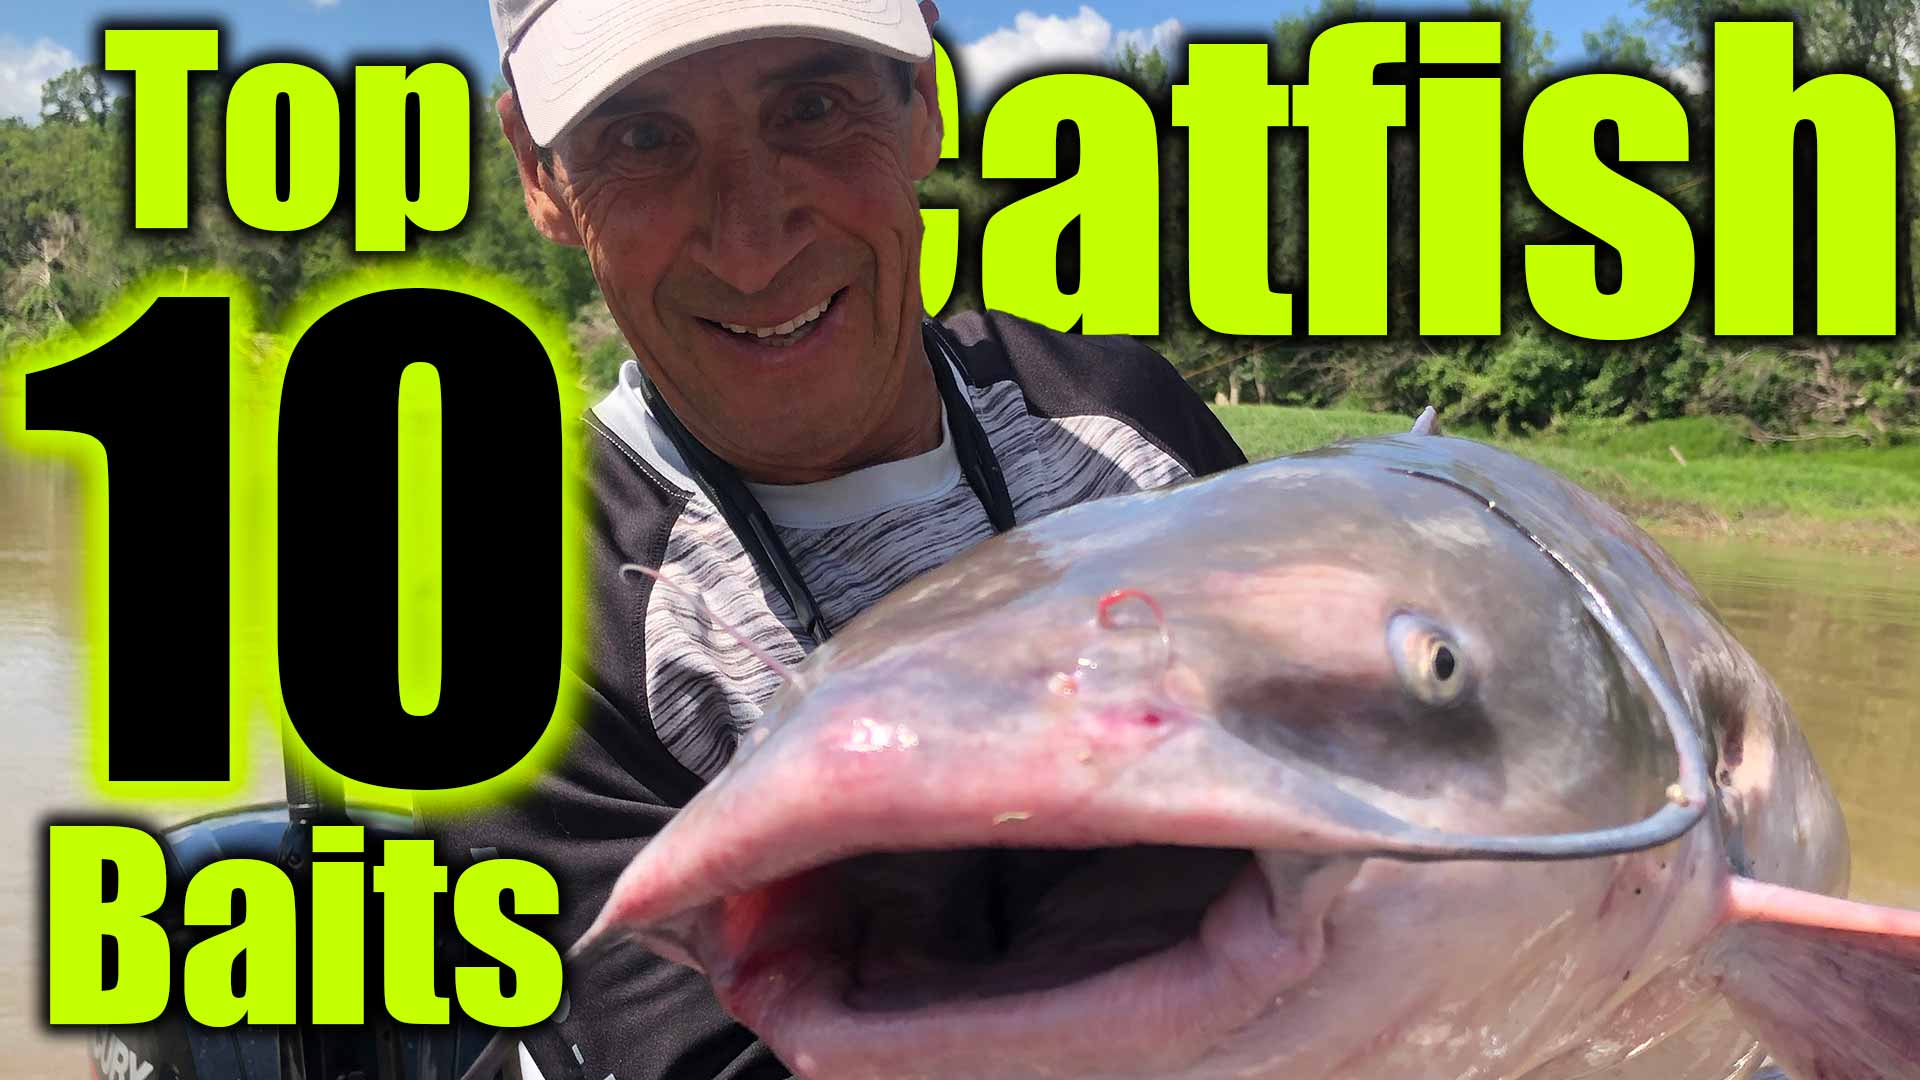 Best Catfish Bait: The Top 5 Catfish Baits Made Simple